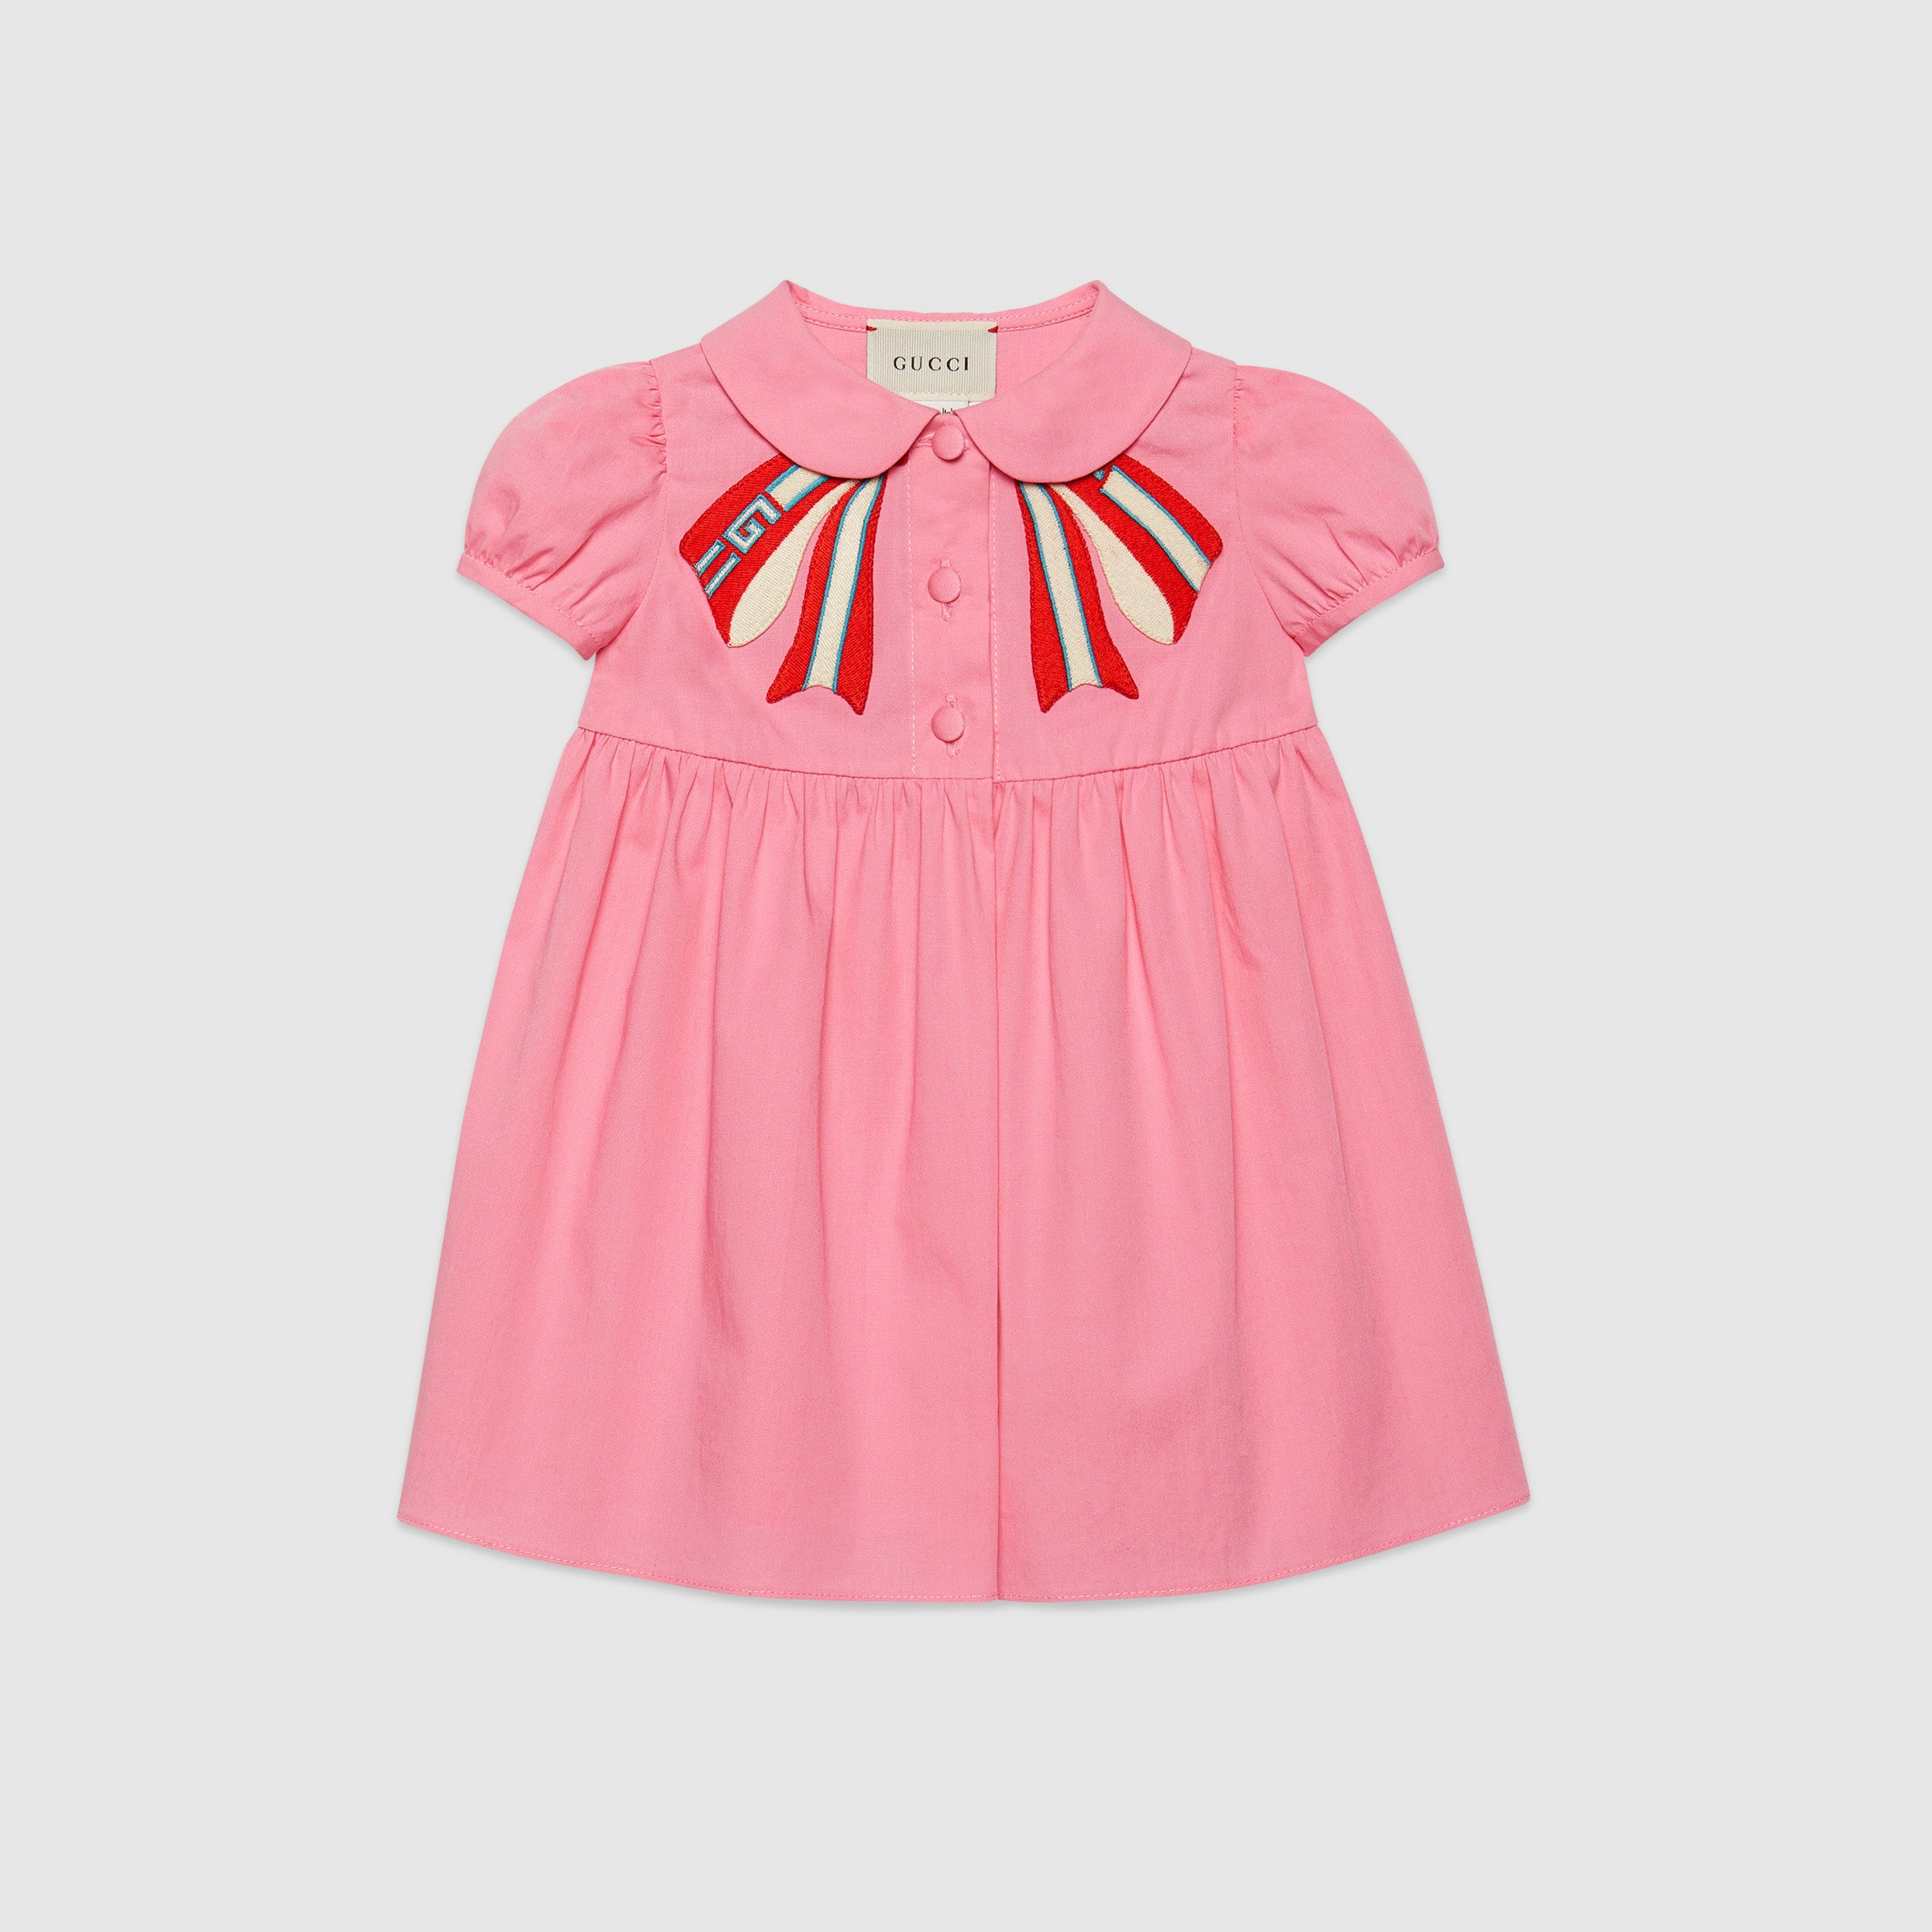 Baby Girls Pink Bowknot Cotton Dress